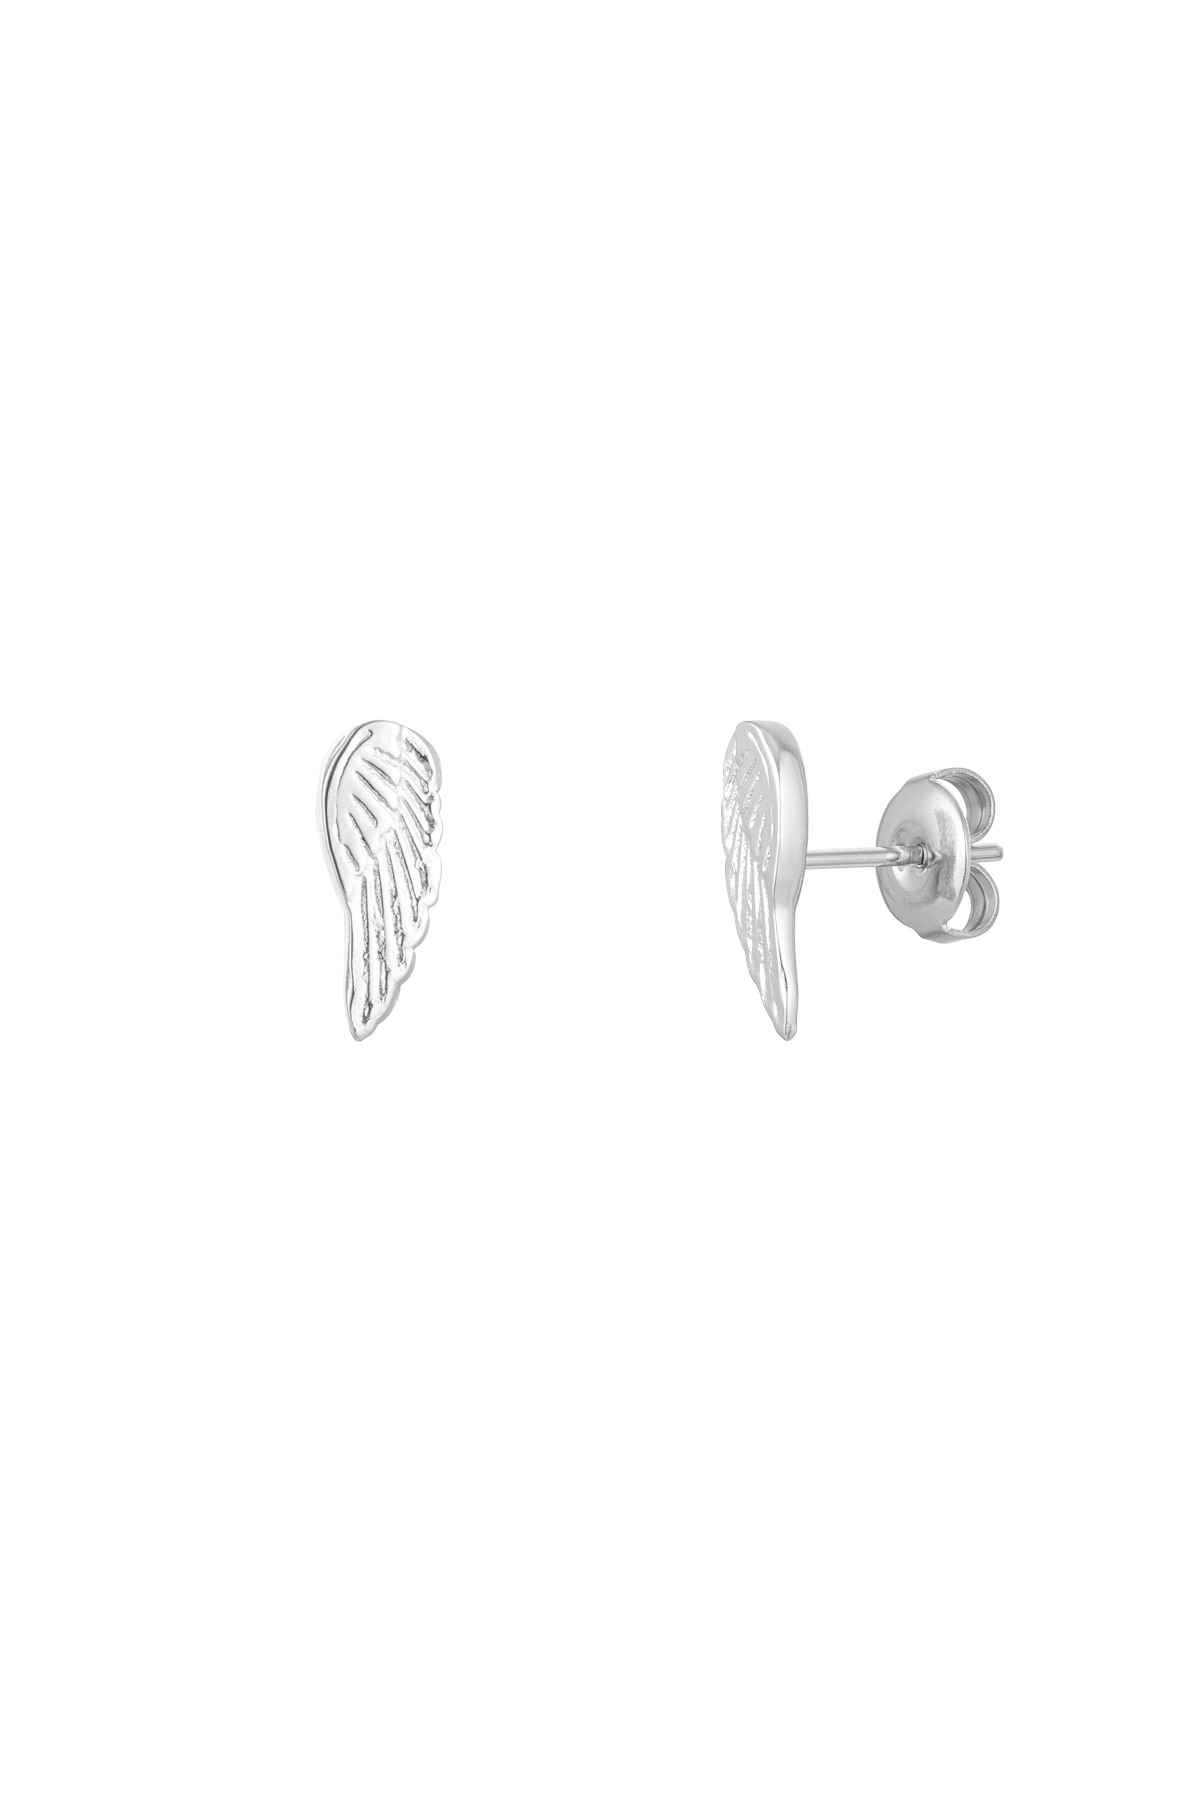 Wing stud earrings - silver Stainless Steel h5 